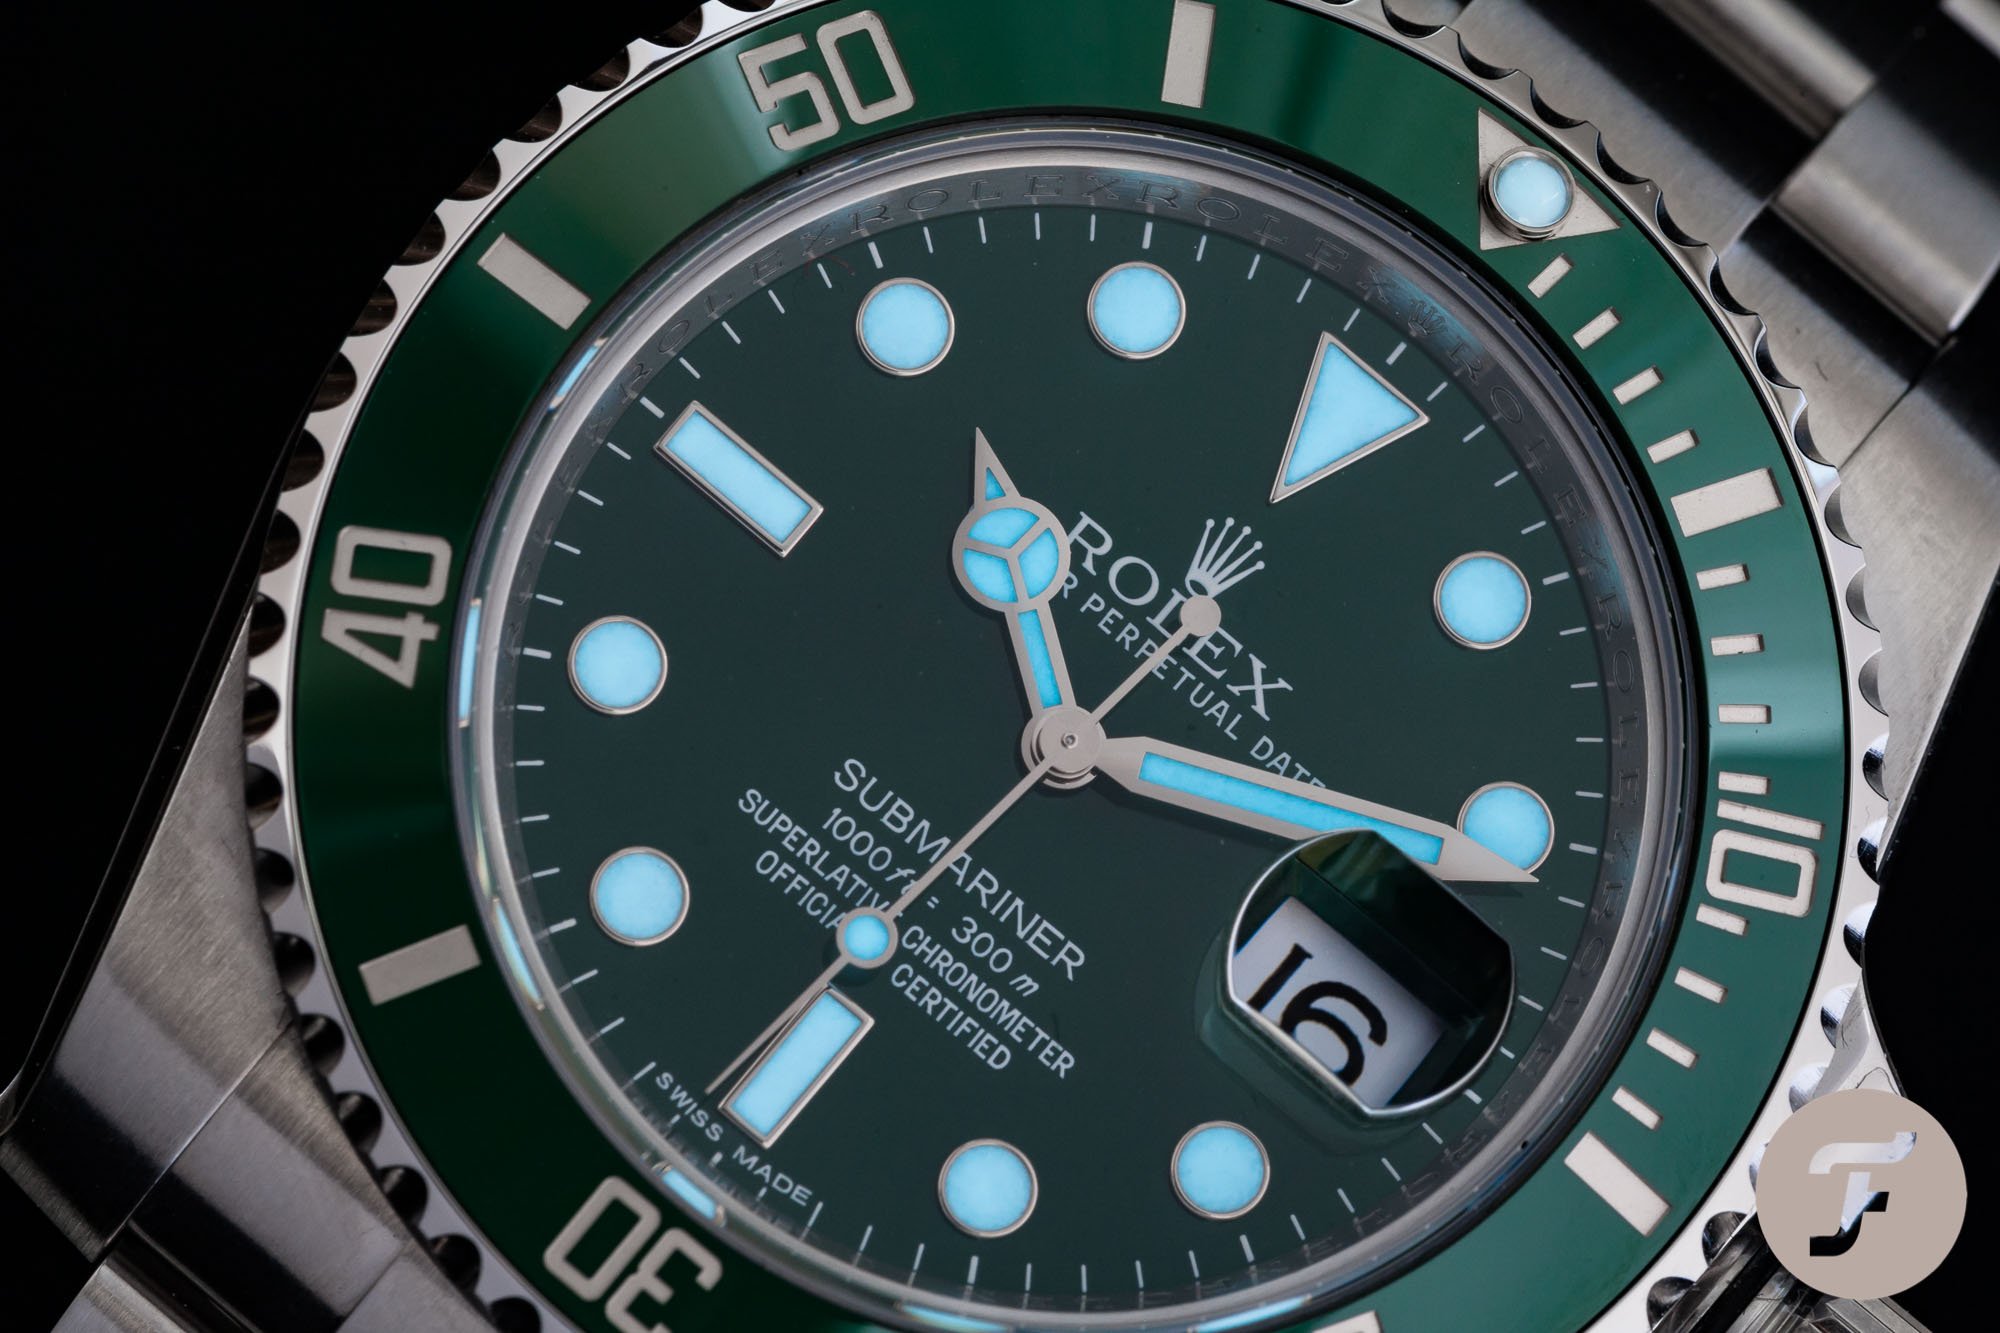 Rolex Submariner LV — Dive Watches From Kermit To Starbucks